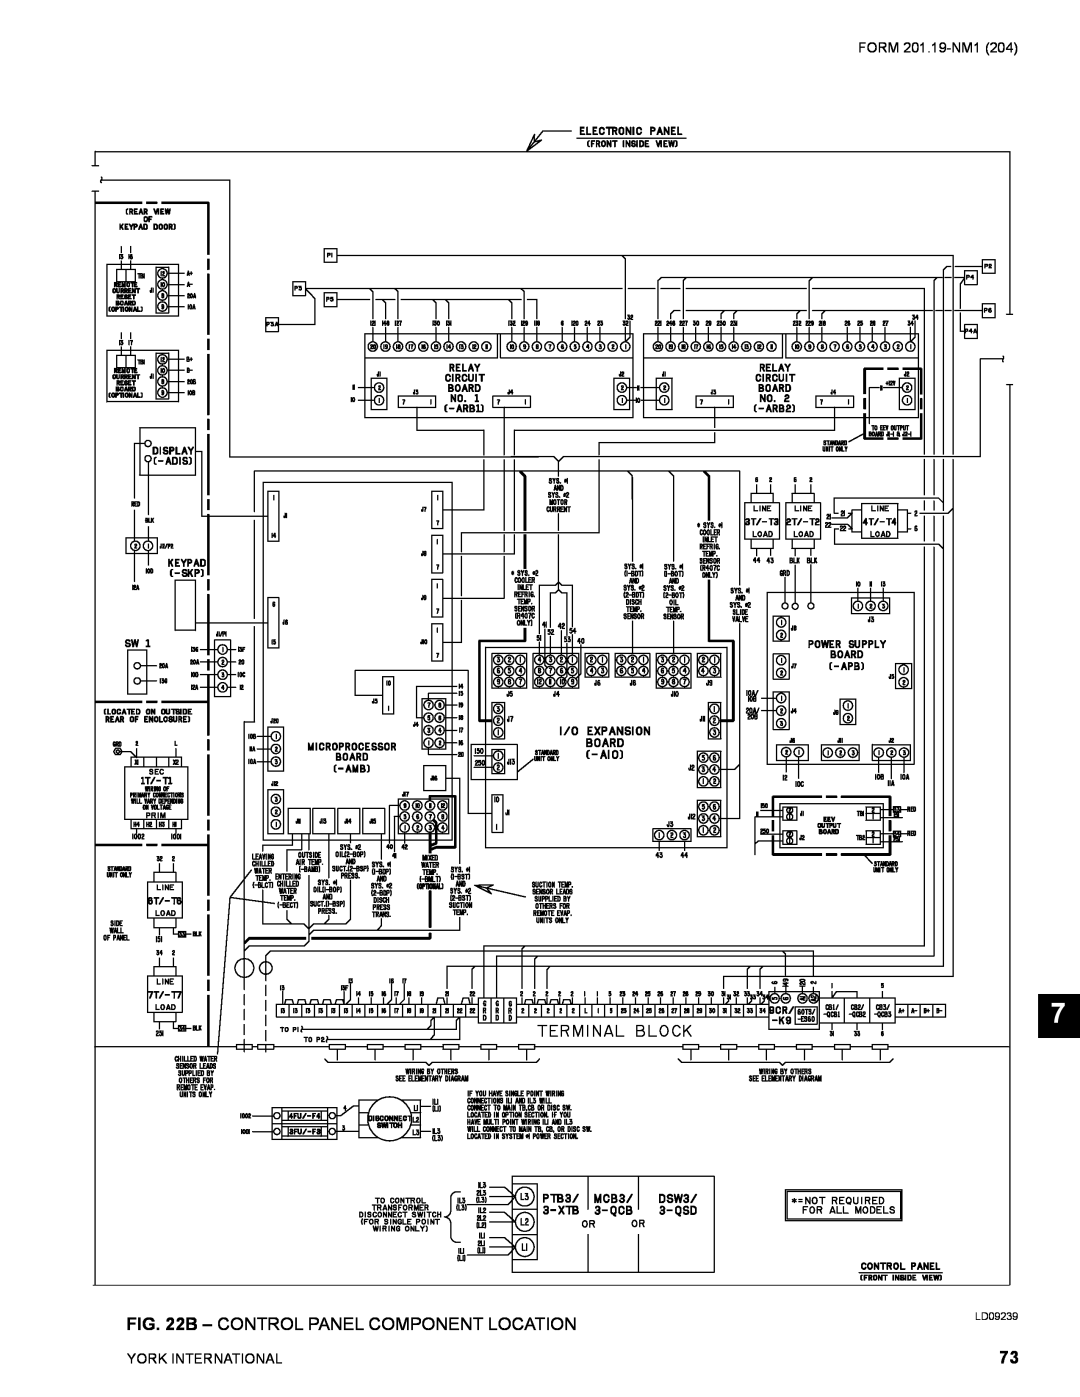 York YCAS0130 manual B - Control Panel Component Location, LD09239 